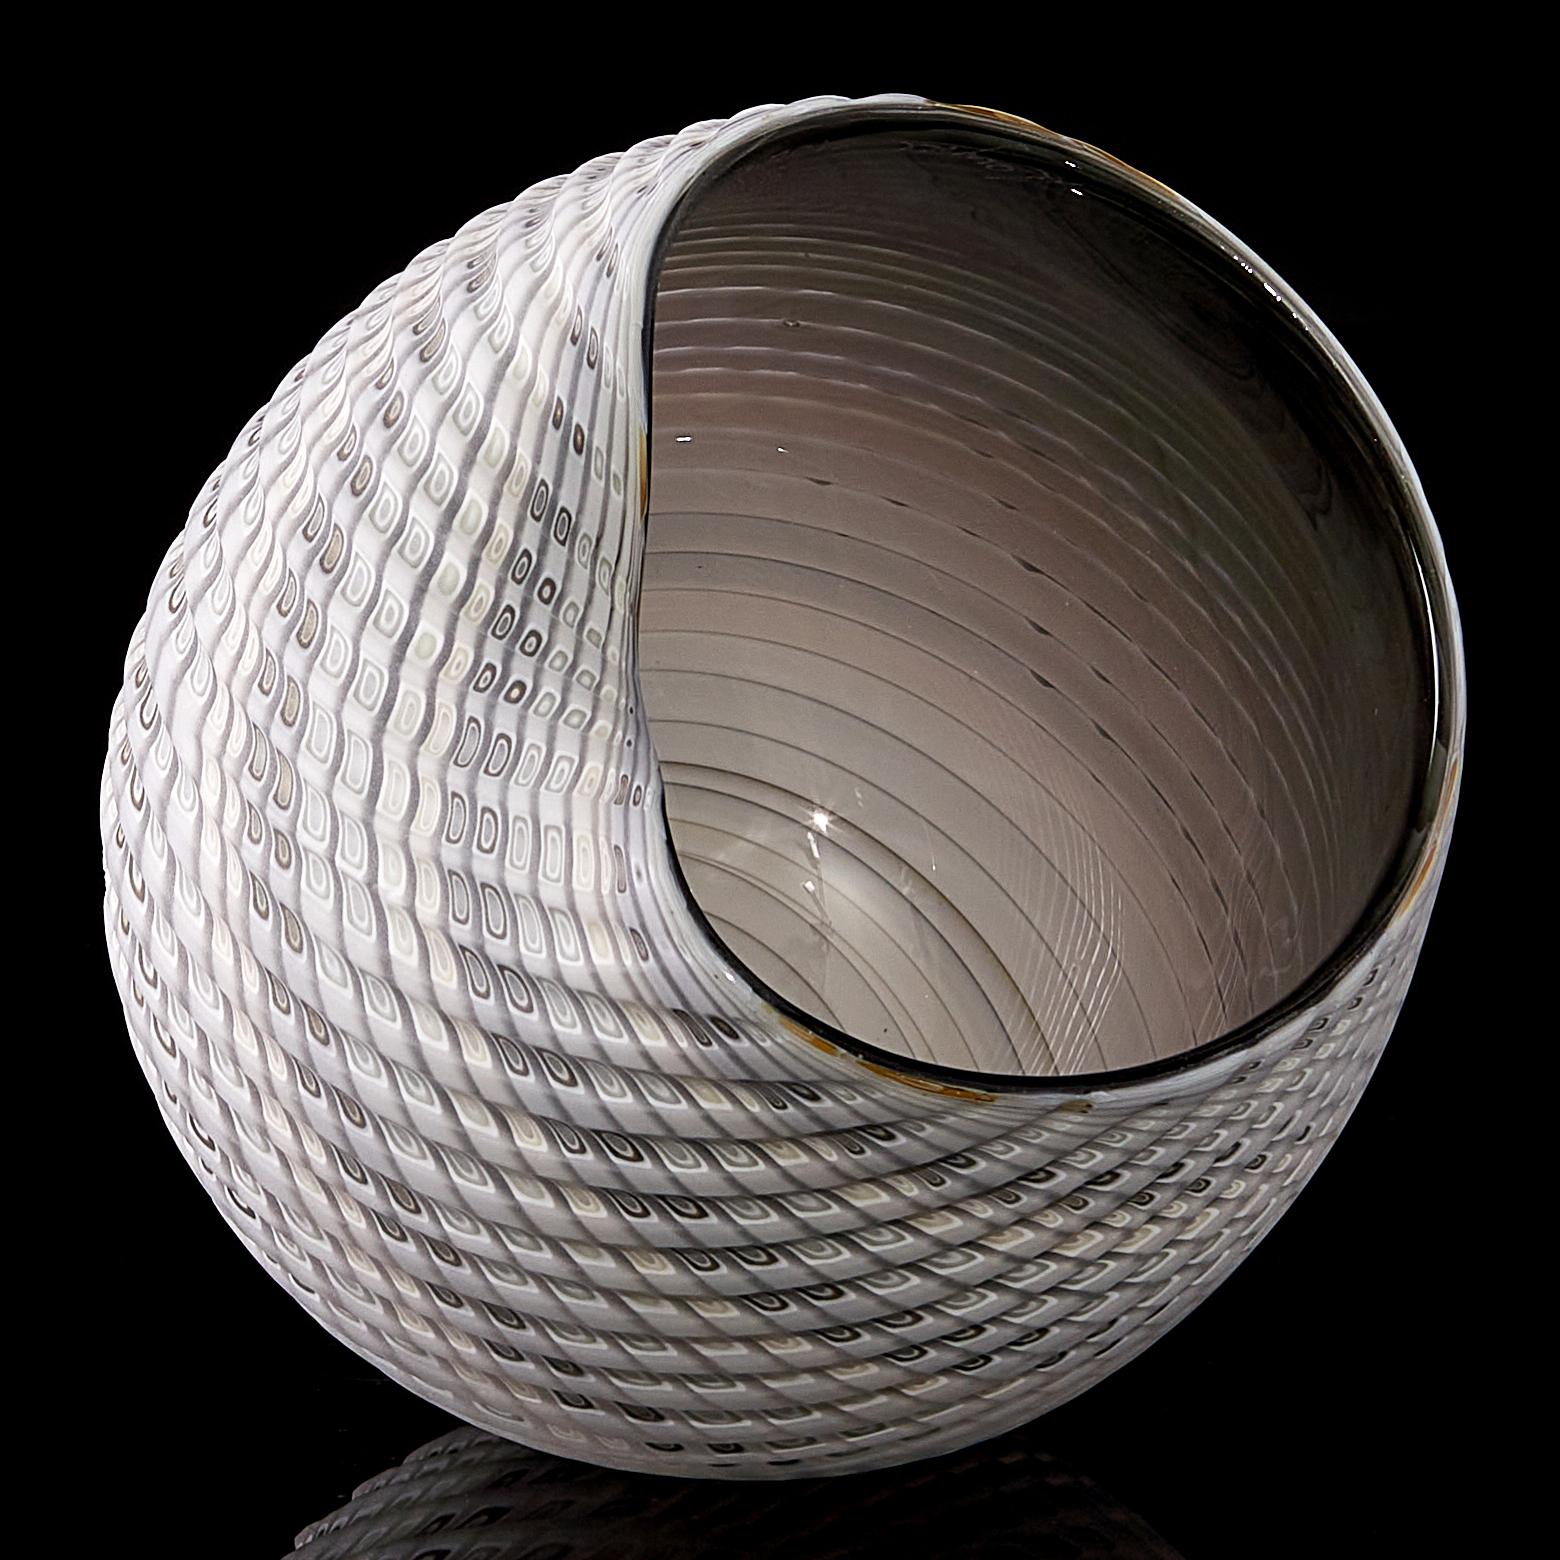 Contemporary Woven Mandala Trio, an Organic Textured Art Glass Still Life by Layne Rowe